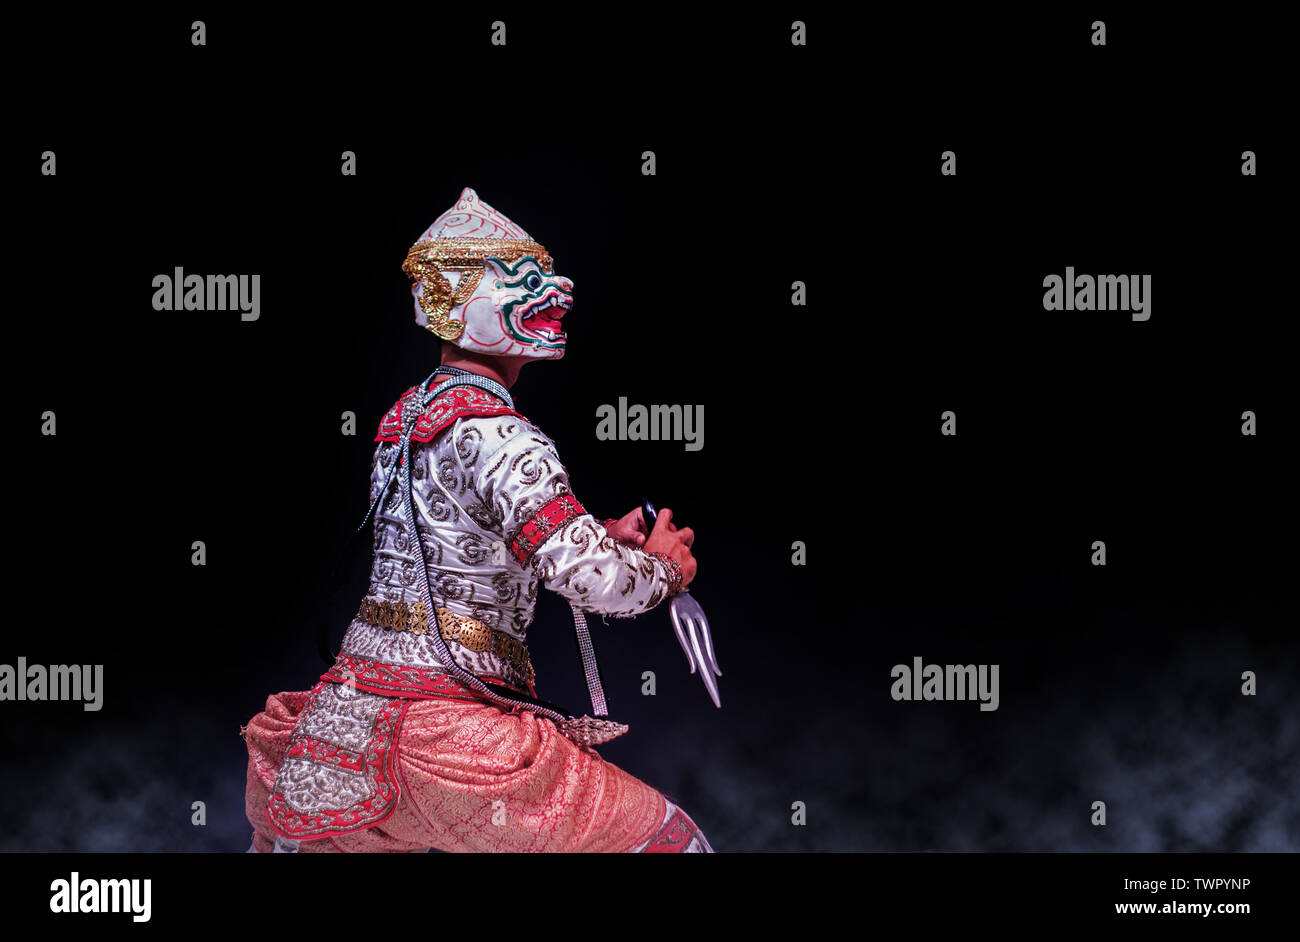 15 May 2019,Bangkok,Thailand.Hanuman monkey actor in ramayana story performance on dark background with smoke banner size. Asia royal art show on Stock Photo